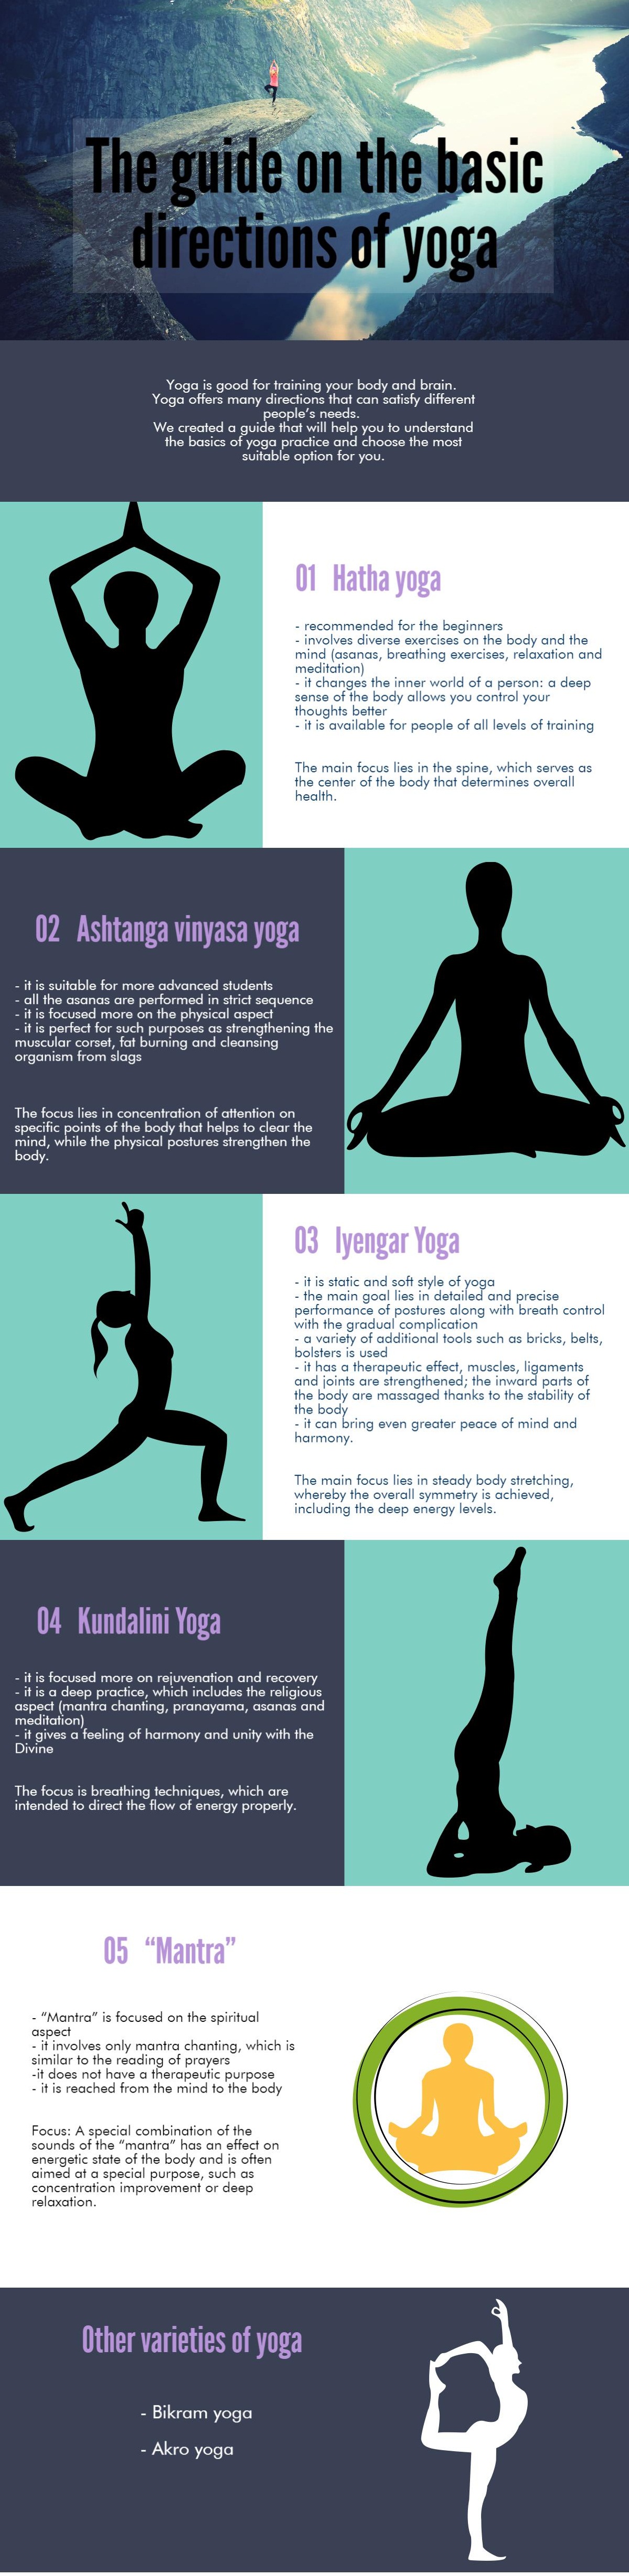 Yoga vs. Meditation: Key Differences